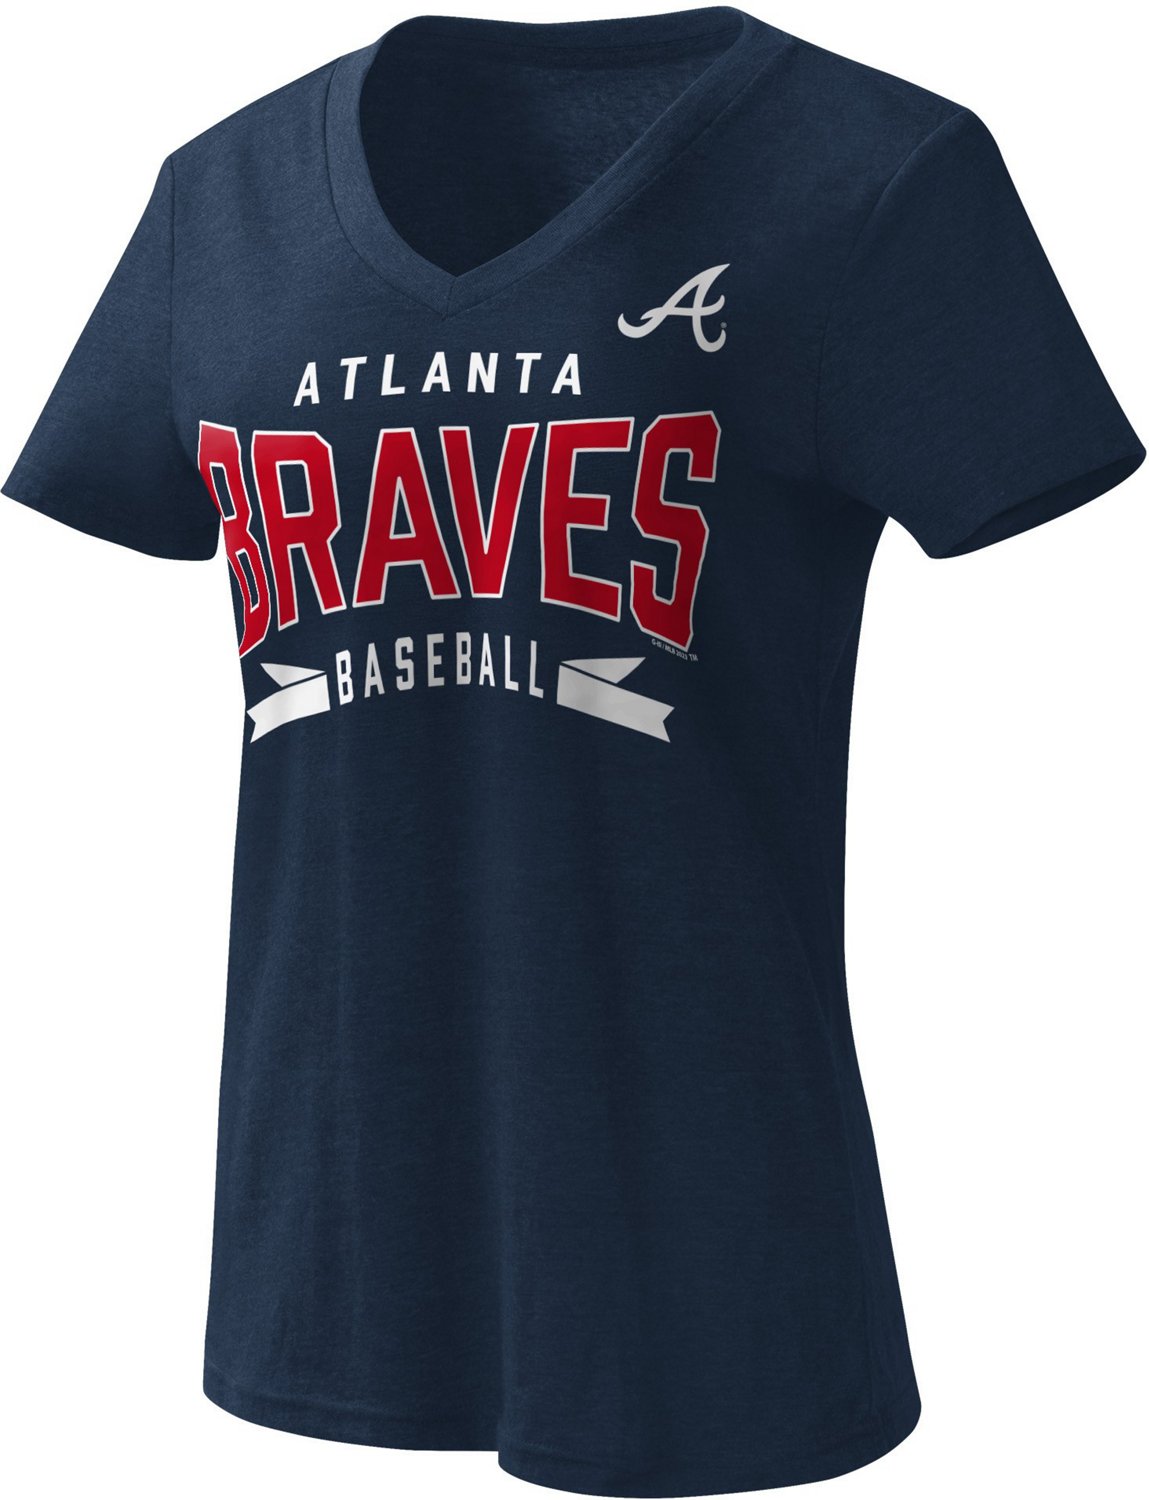 GS Atlanta Braves Women's T-Shirt